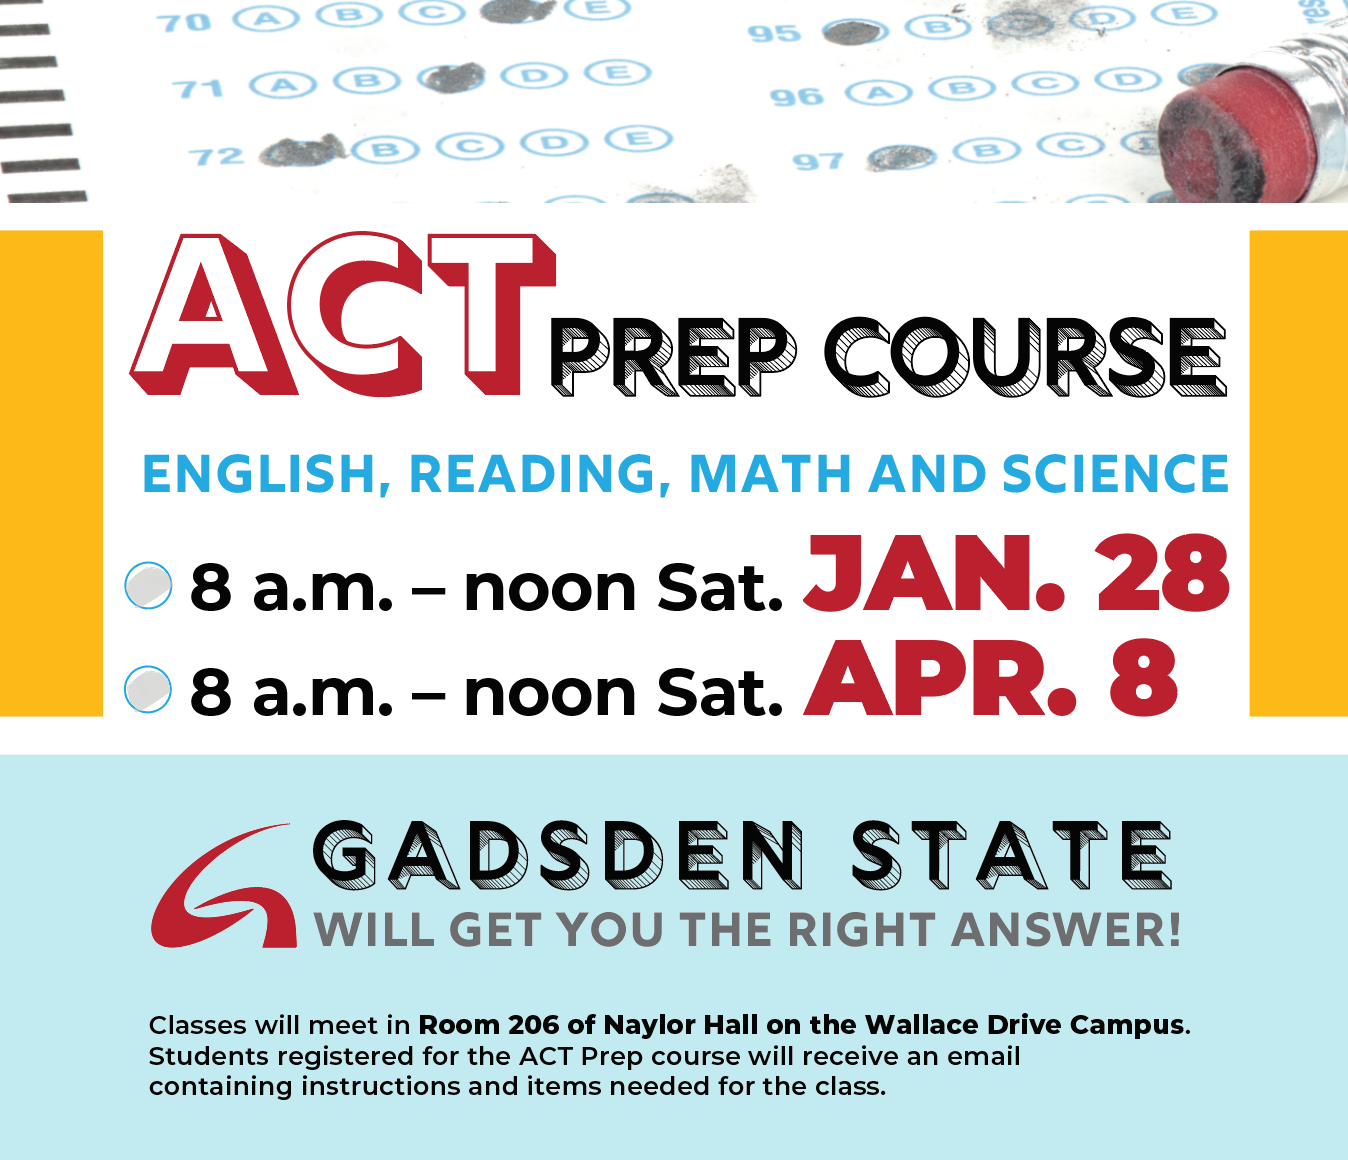 ACT test prep courses